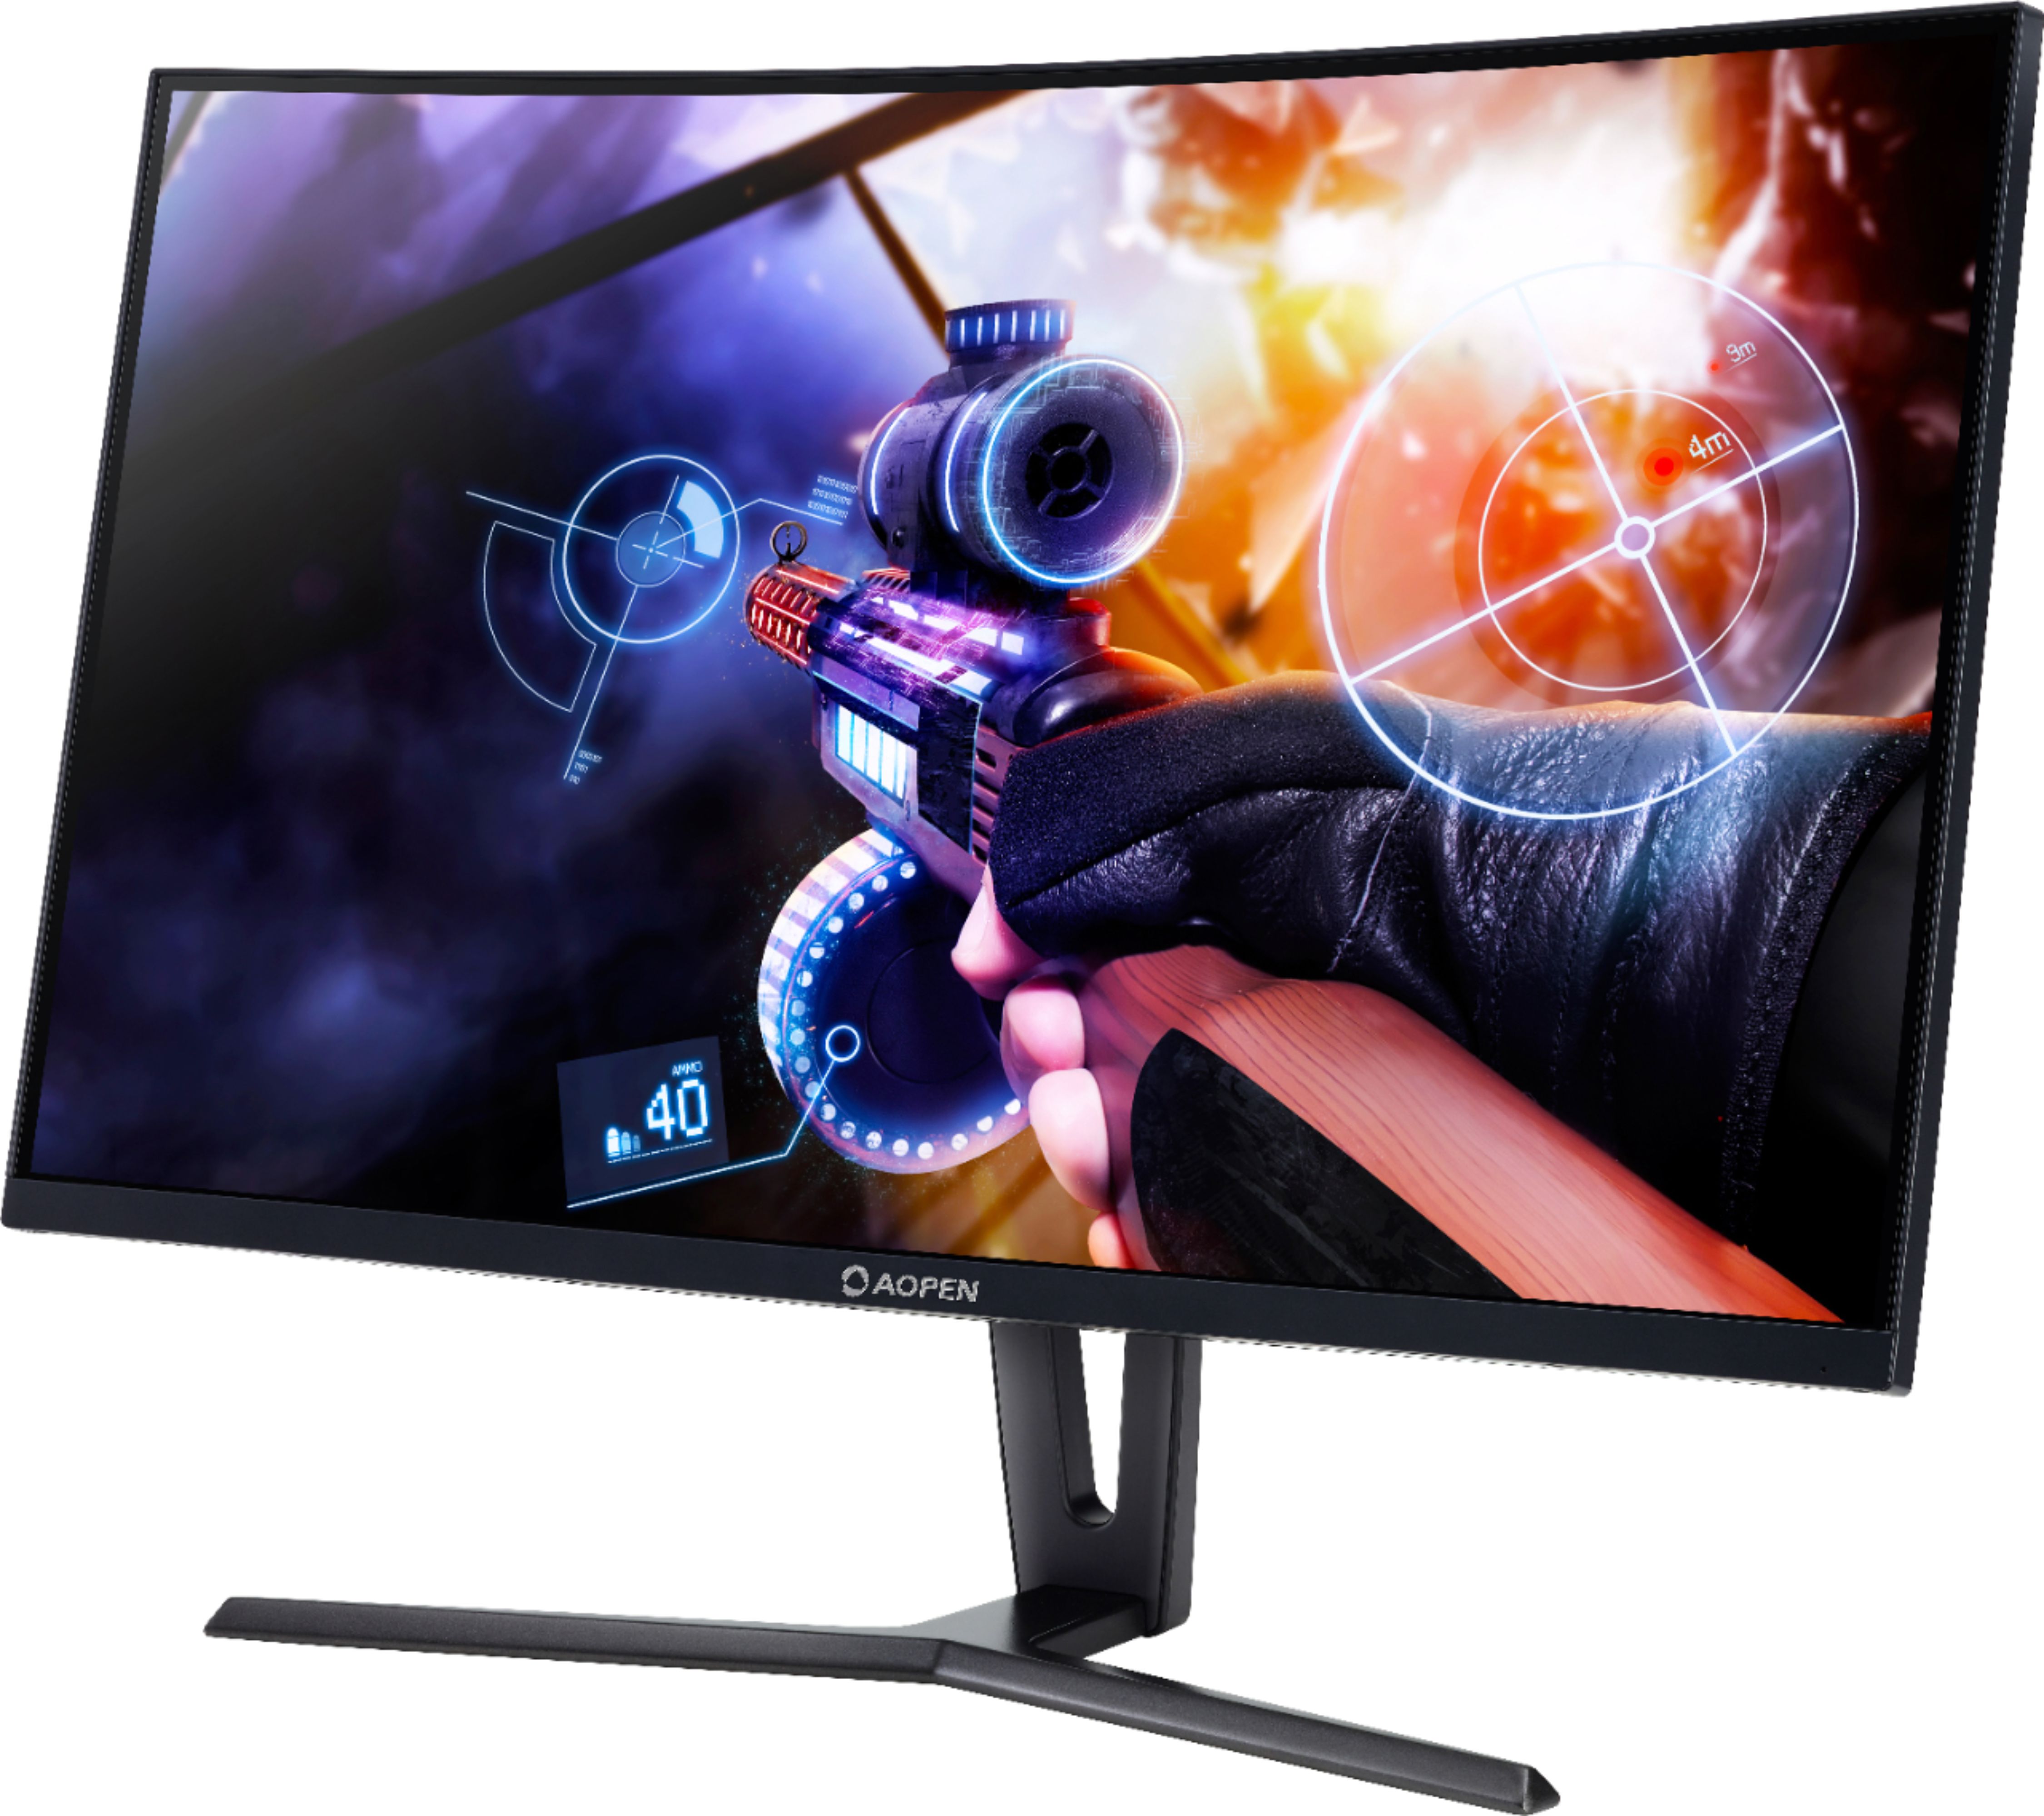 32 inch monitor - Best Buy